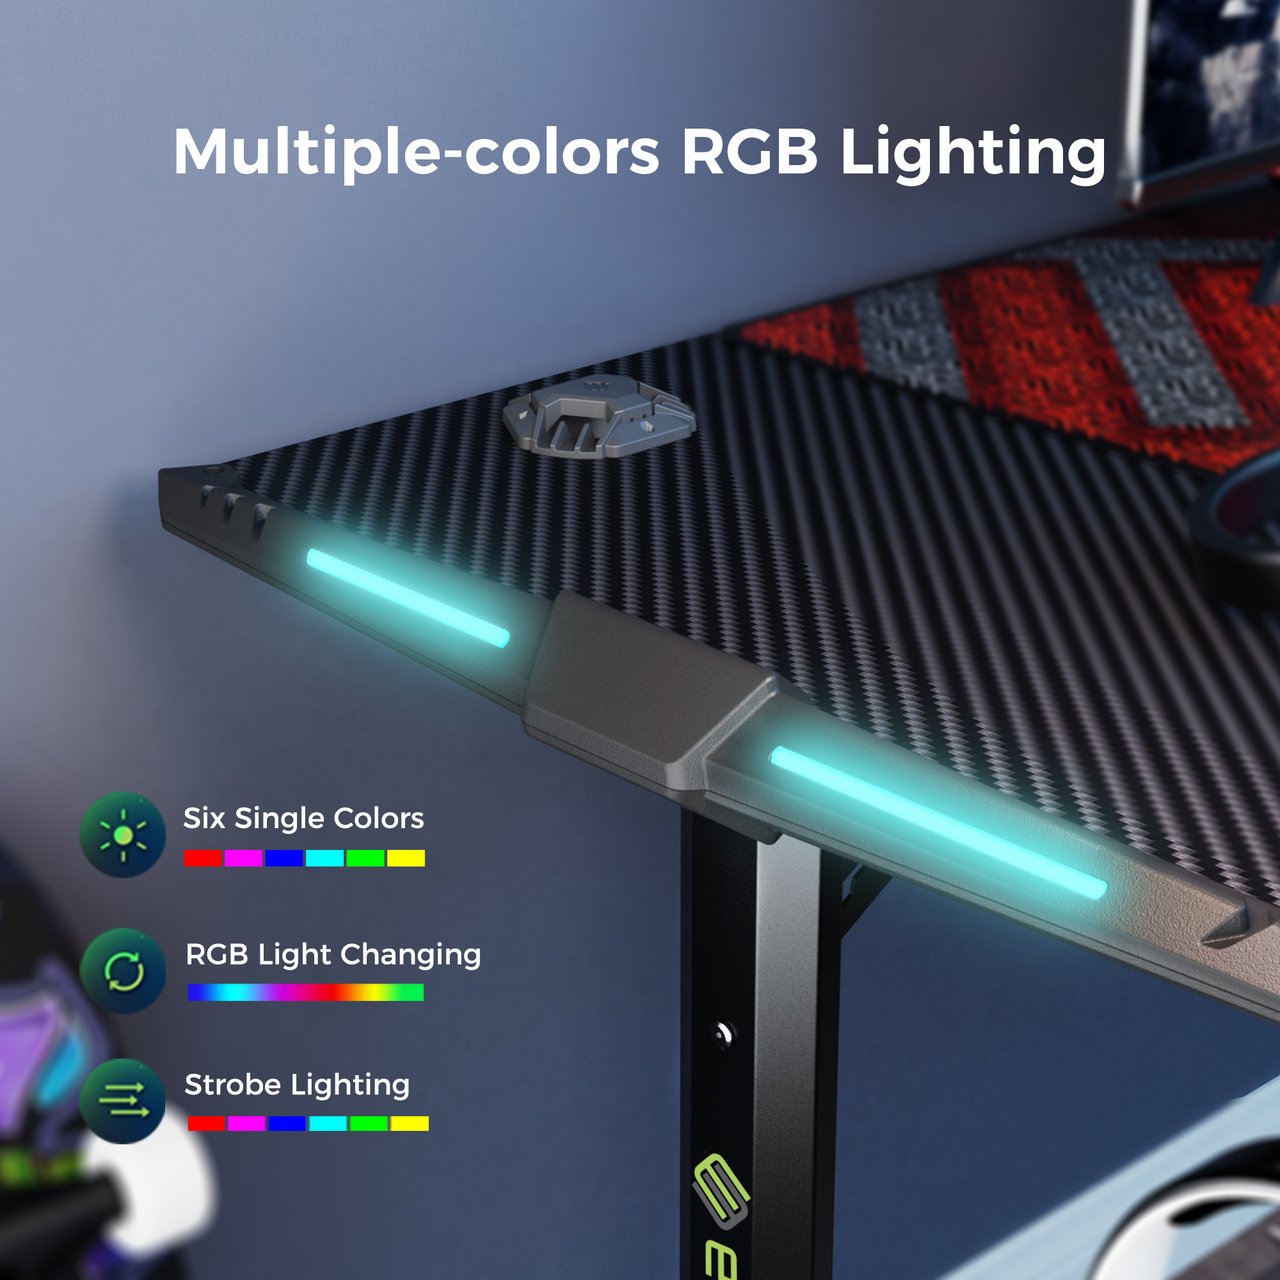 Controllable RGB Lighting